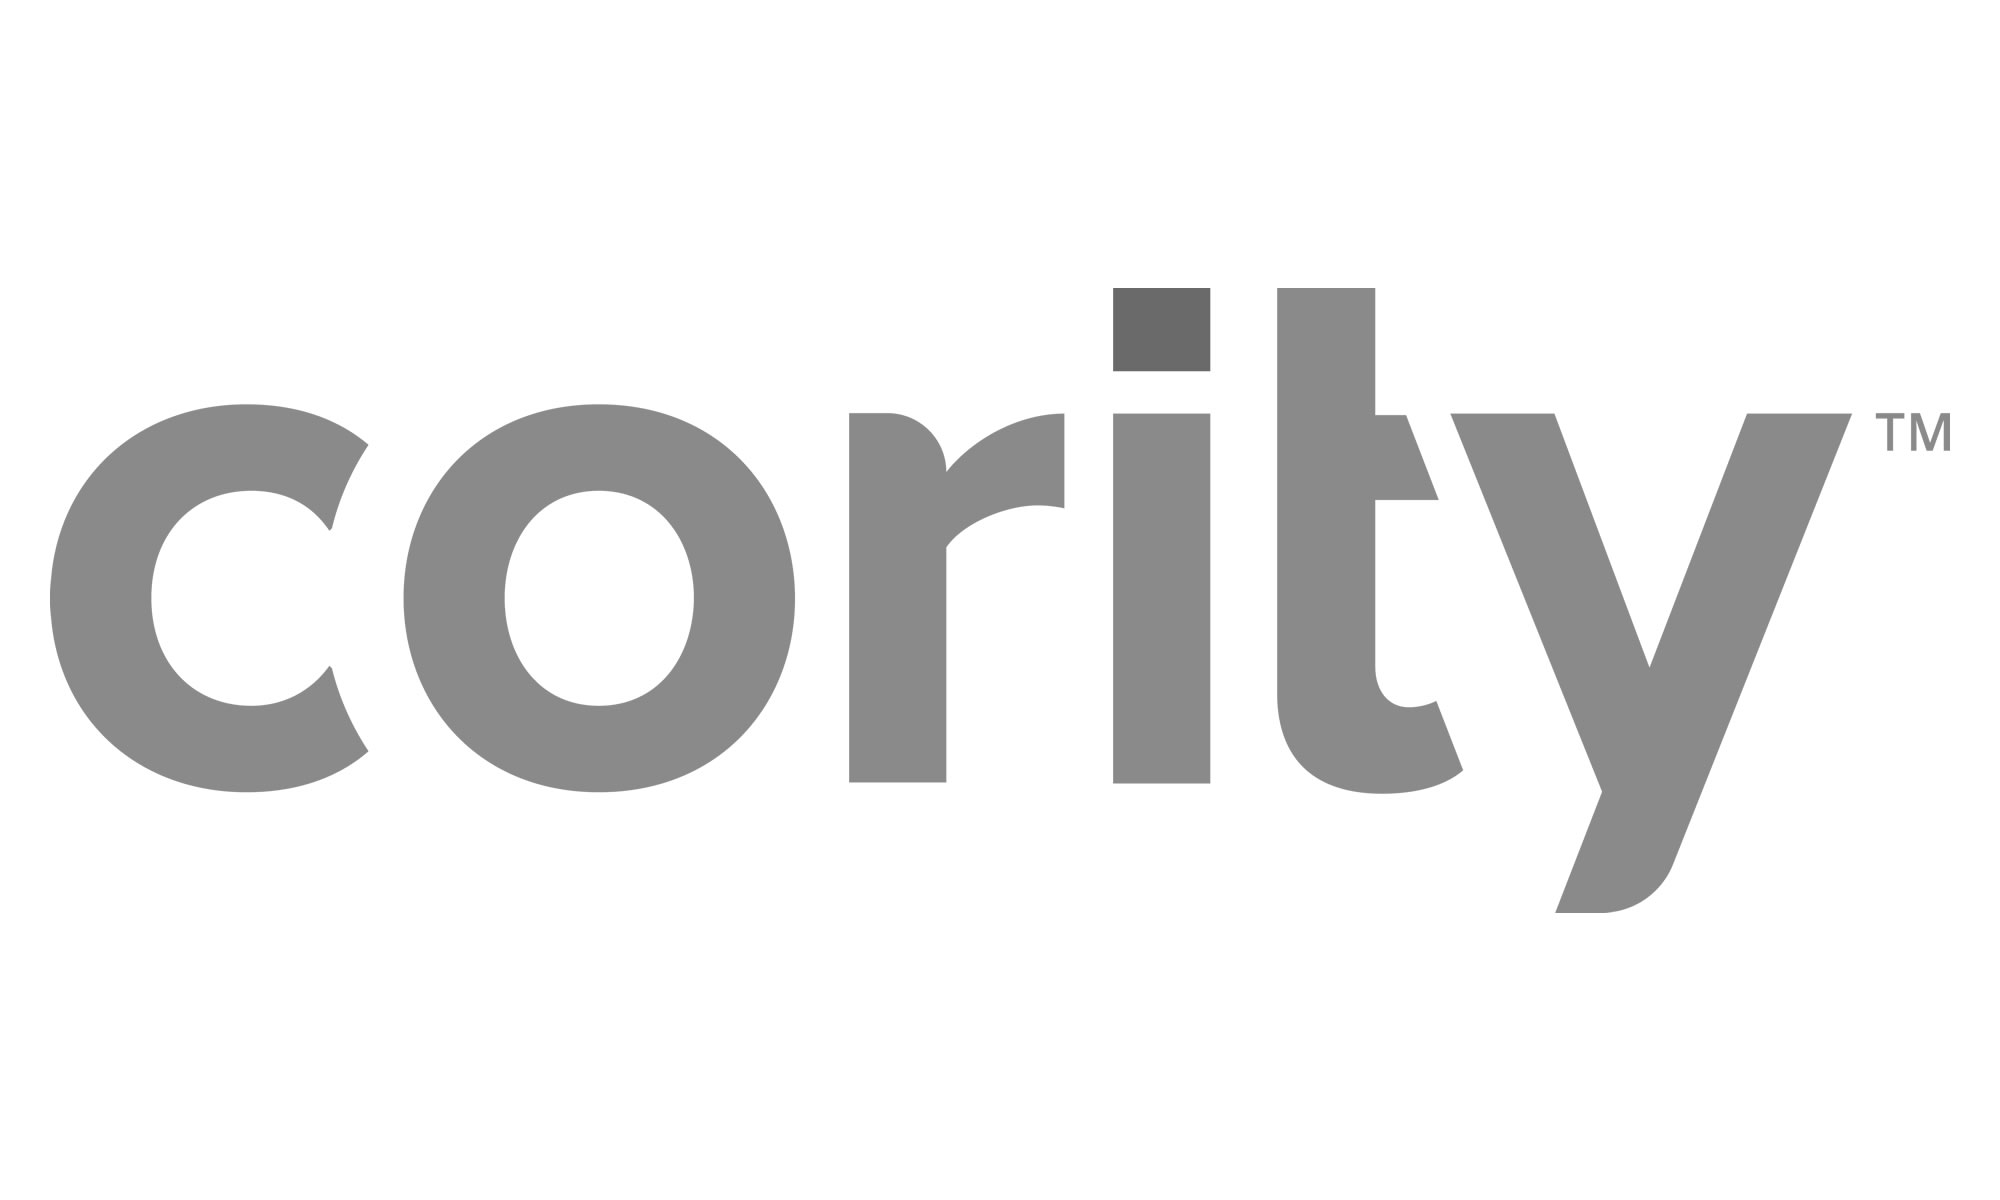 Cority – Award-Winning EHSQ Software and OHS Software.